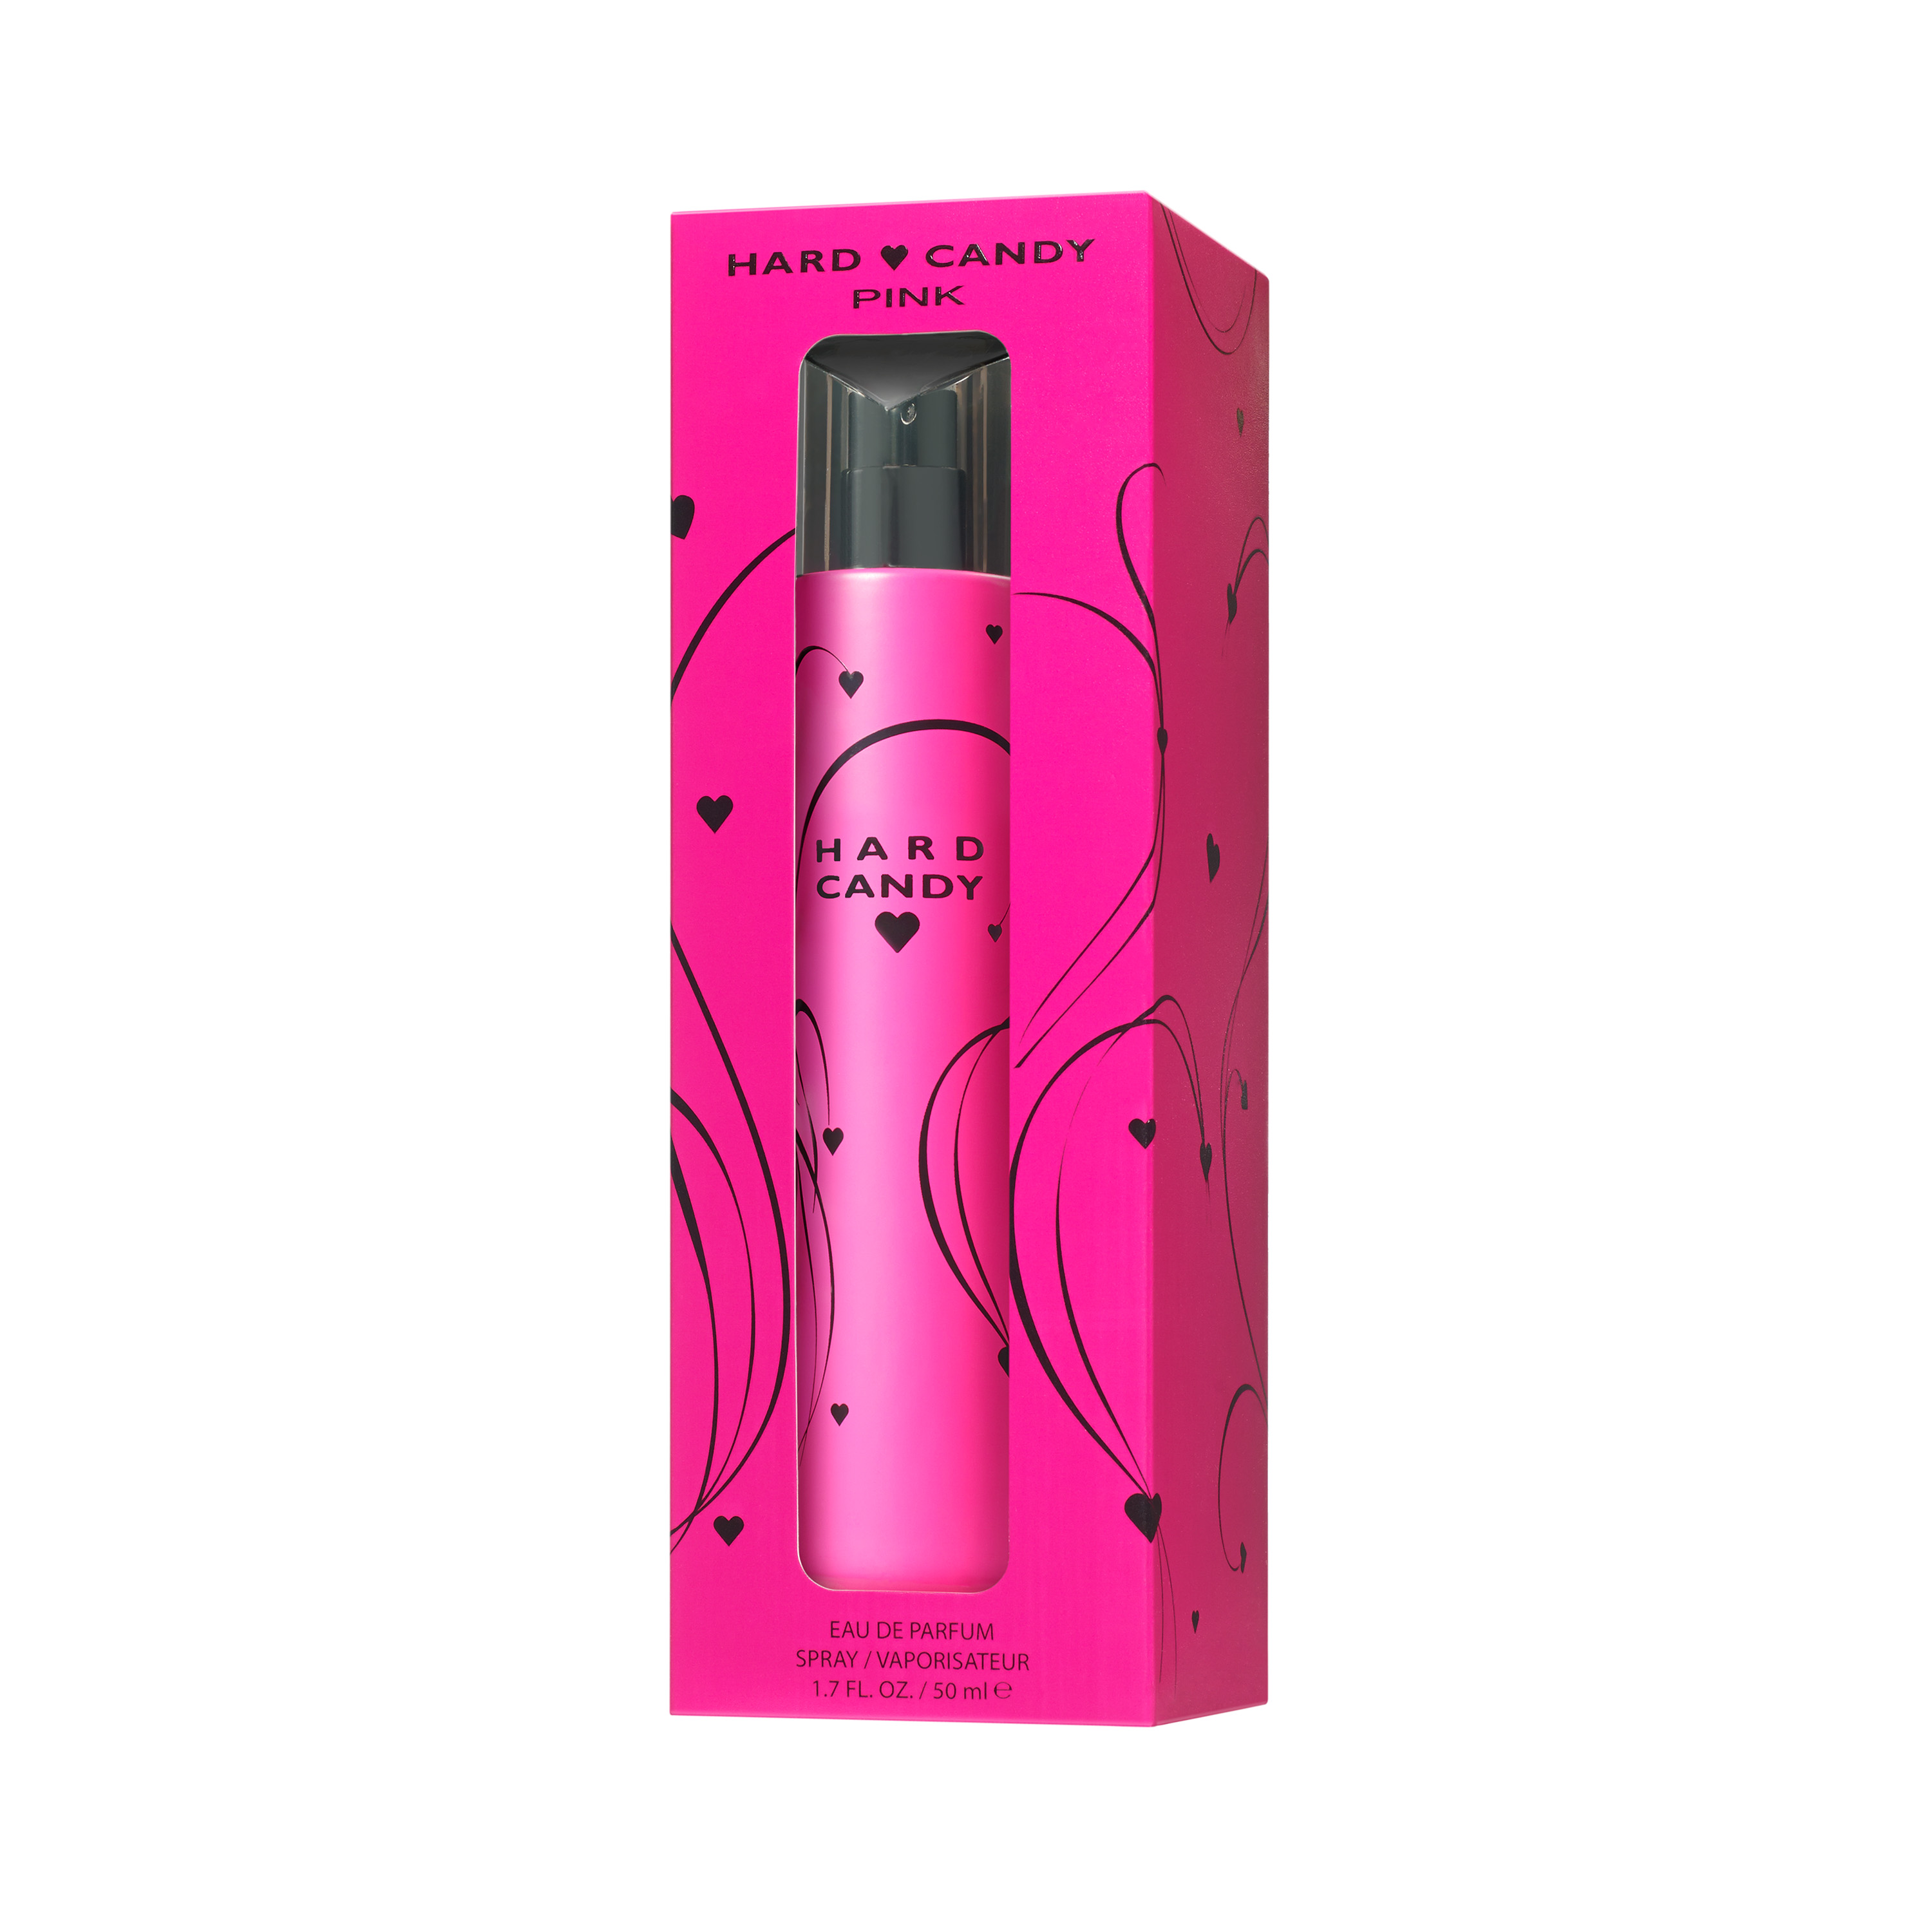 Hard Candy Pink Eau de Parfum, Perfume for Women, 1.7 Oz Full Size - image 1 of 3